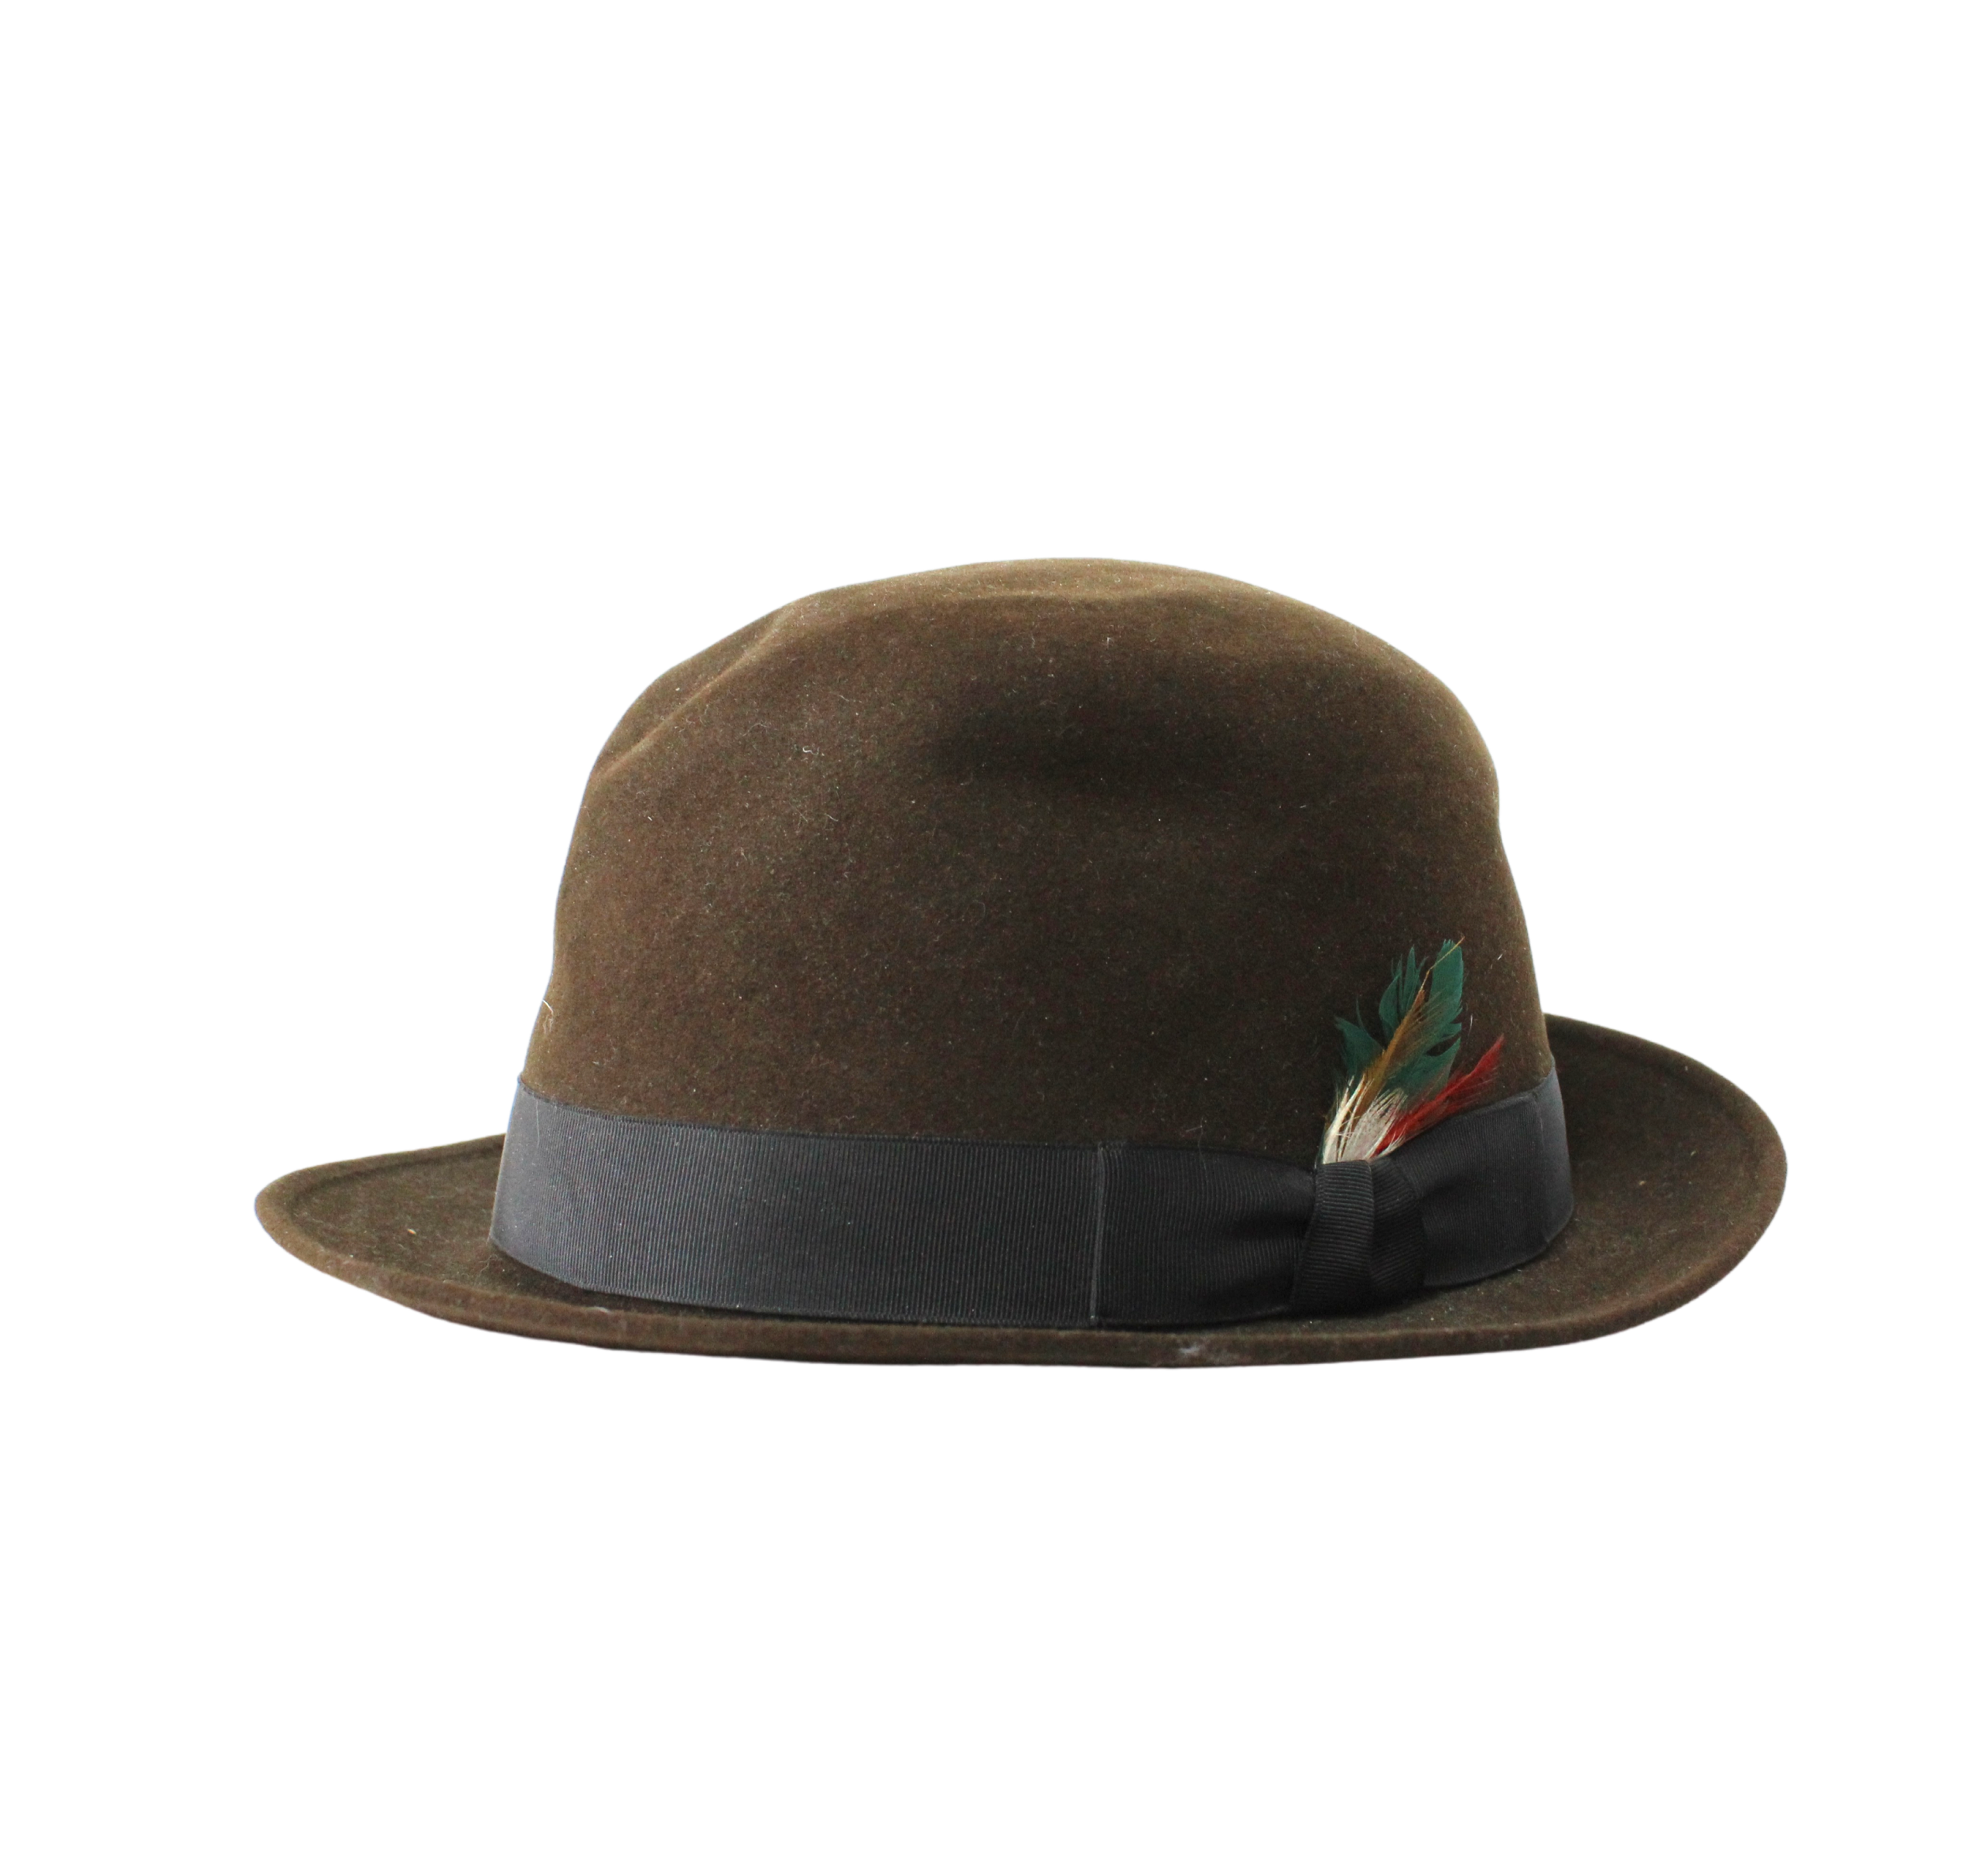 Euji's Hat